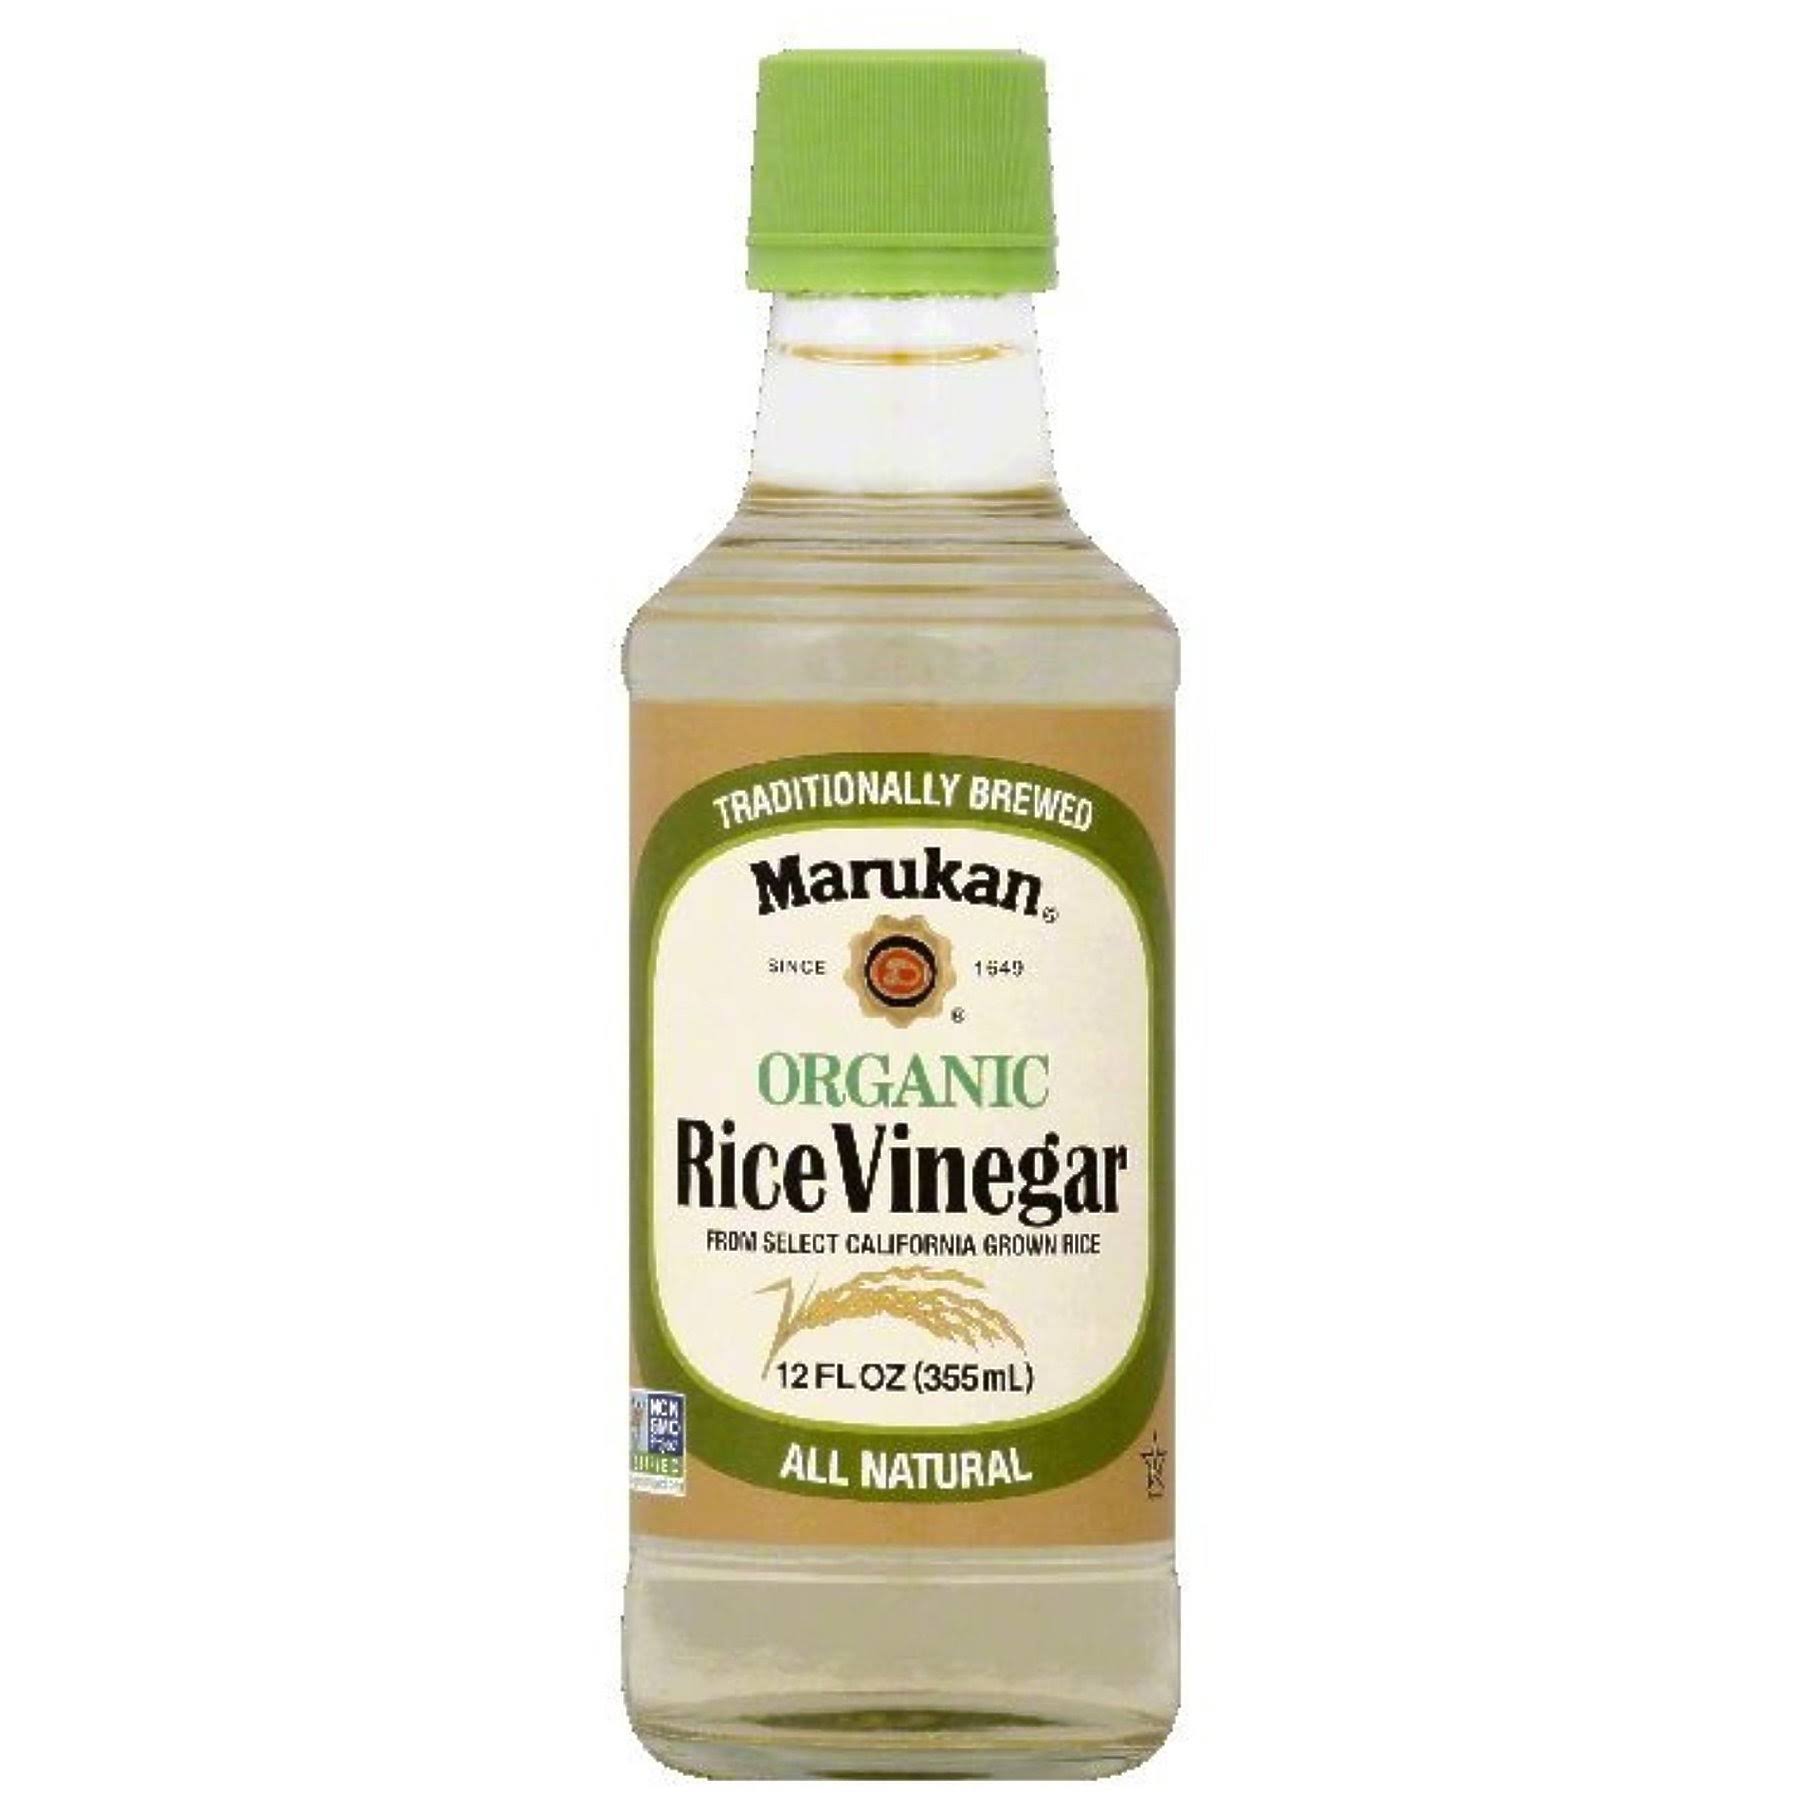 Marukan Rice Vinegar, Organic - 12 fl oz